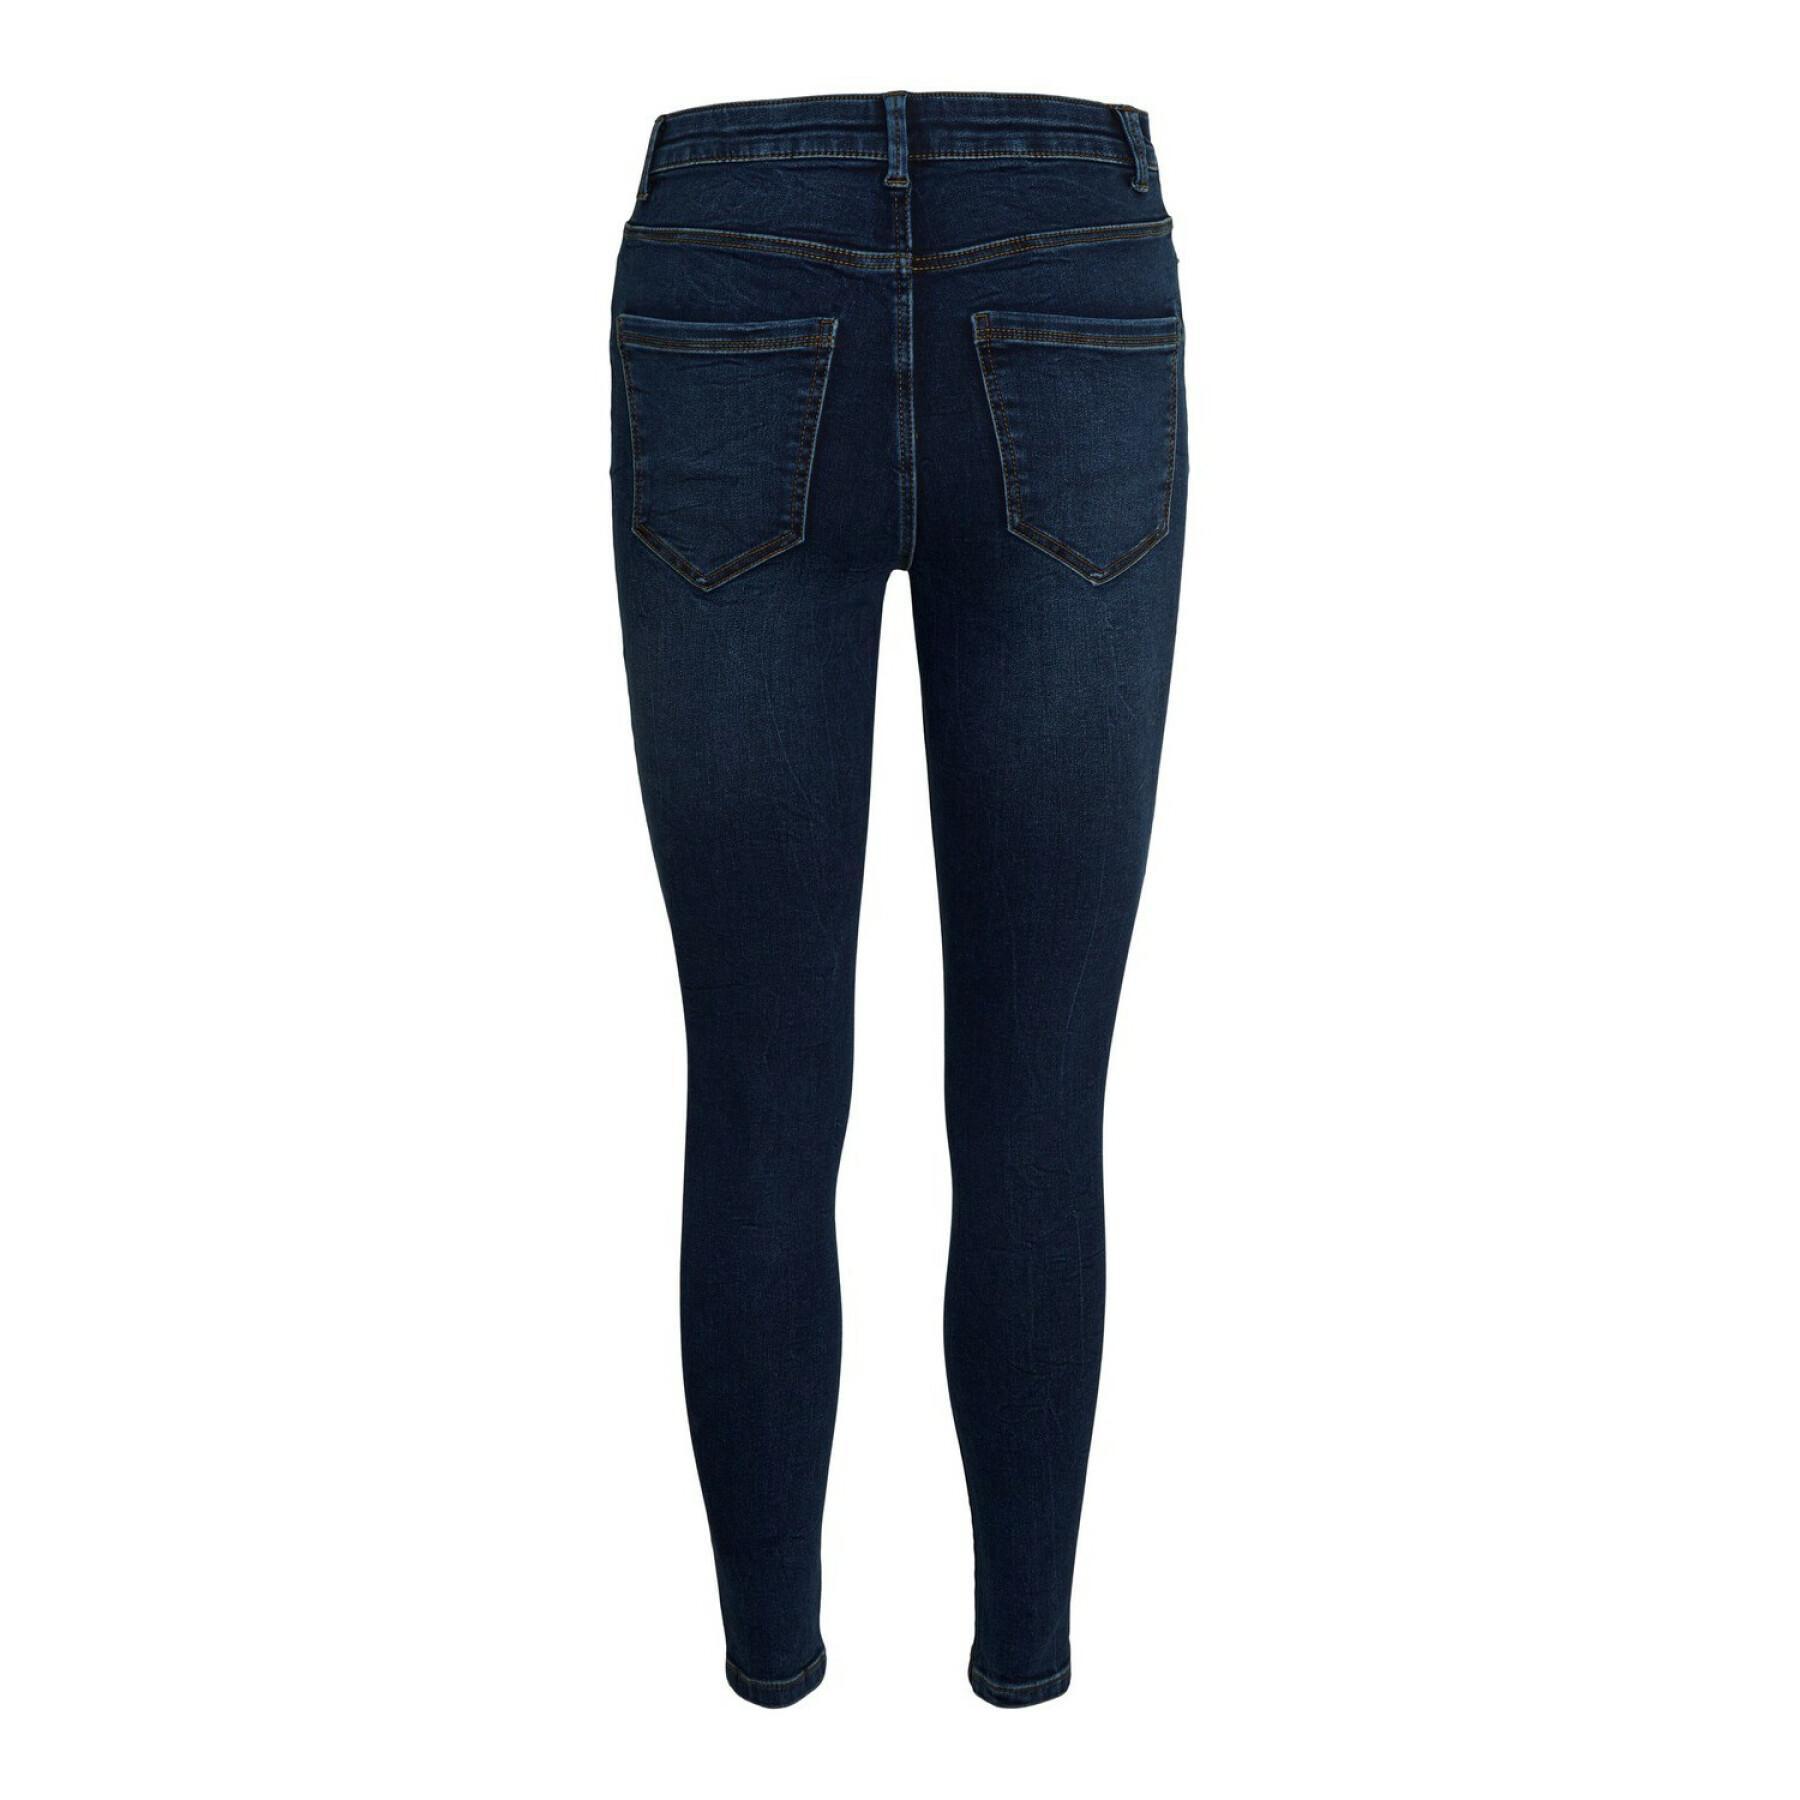 Skinny jeans för kvinnor Vero Moda vmsophia 3128